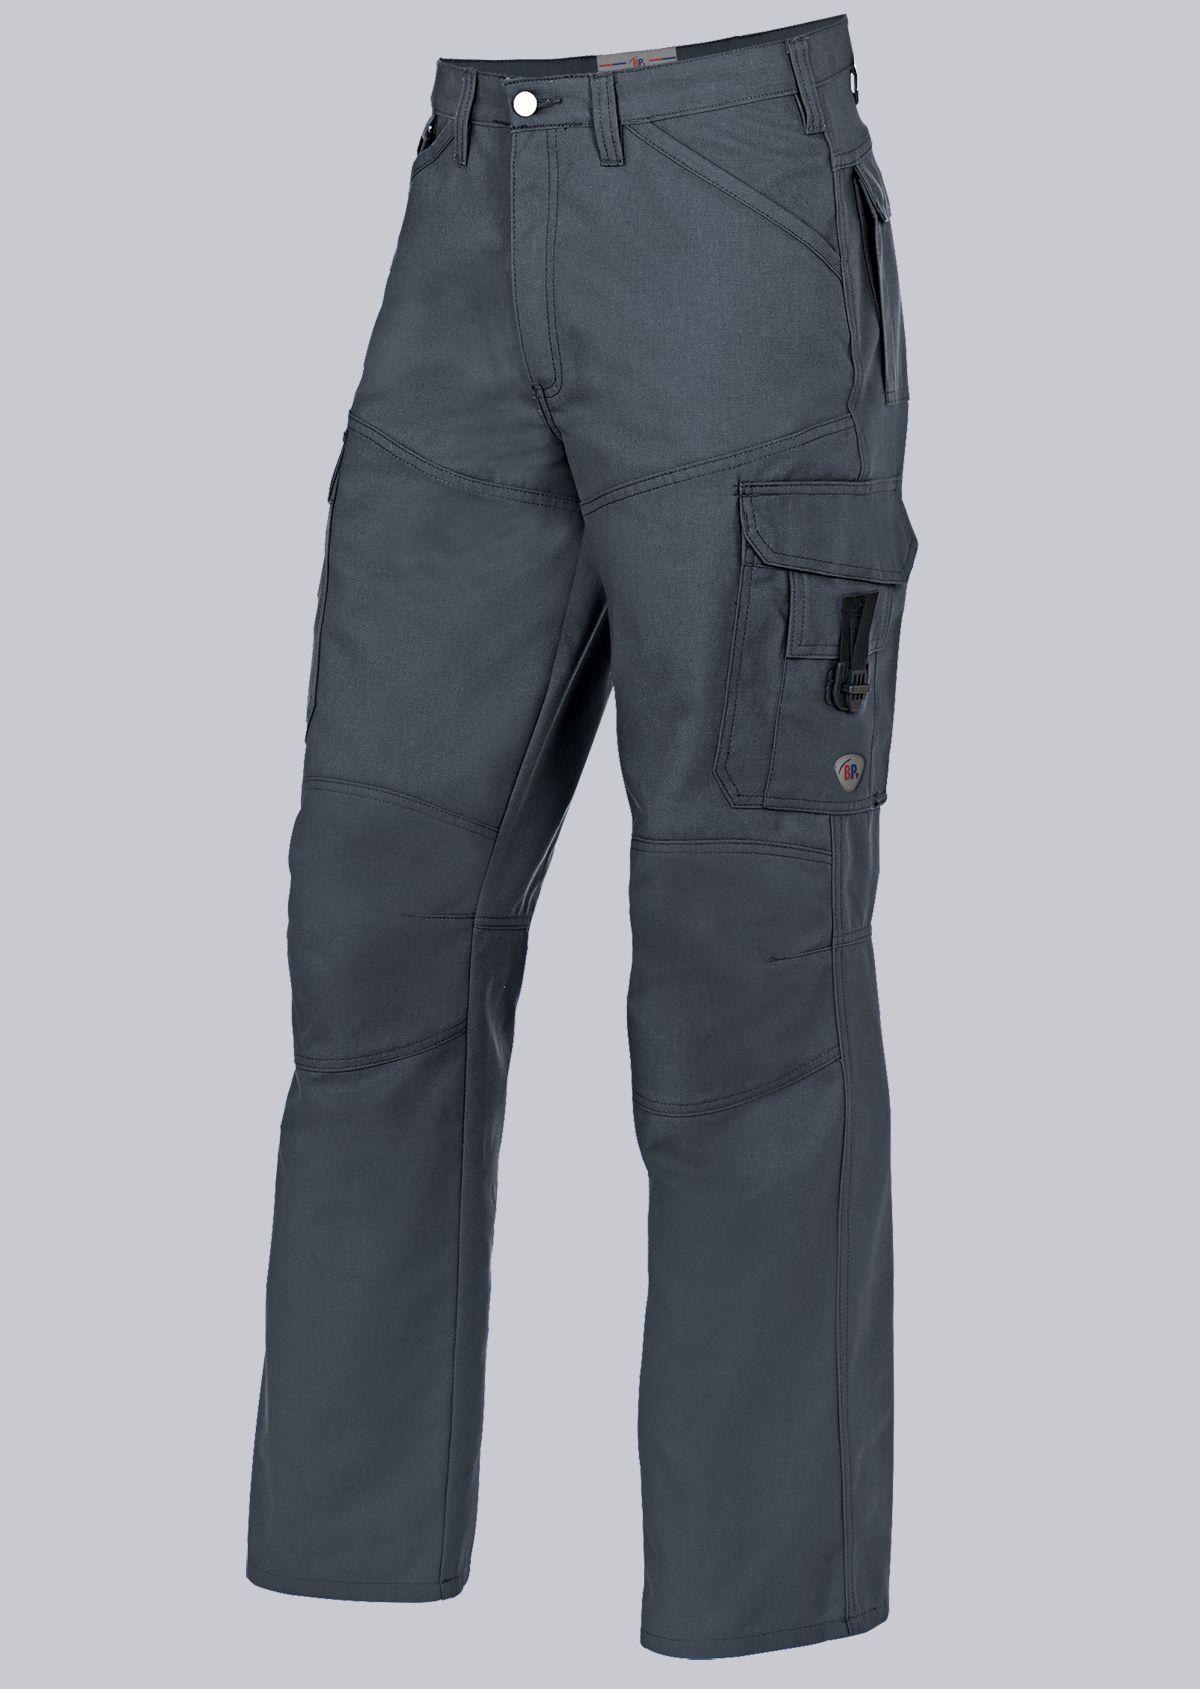 BP® Work trousers